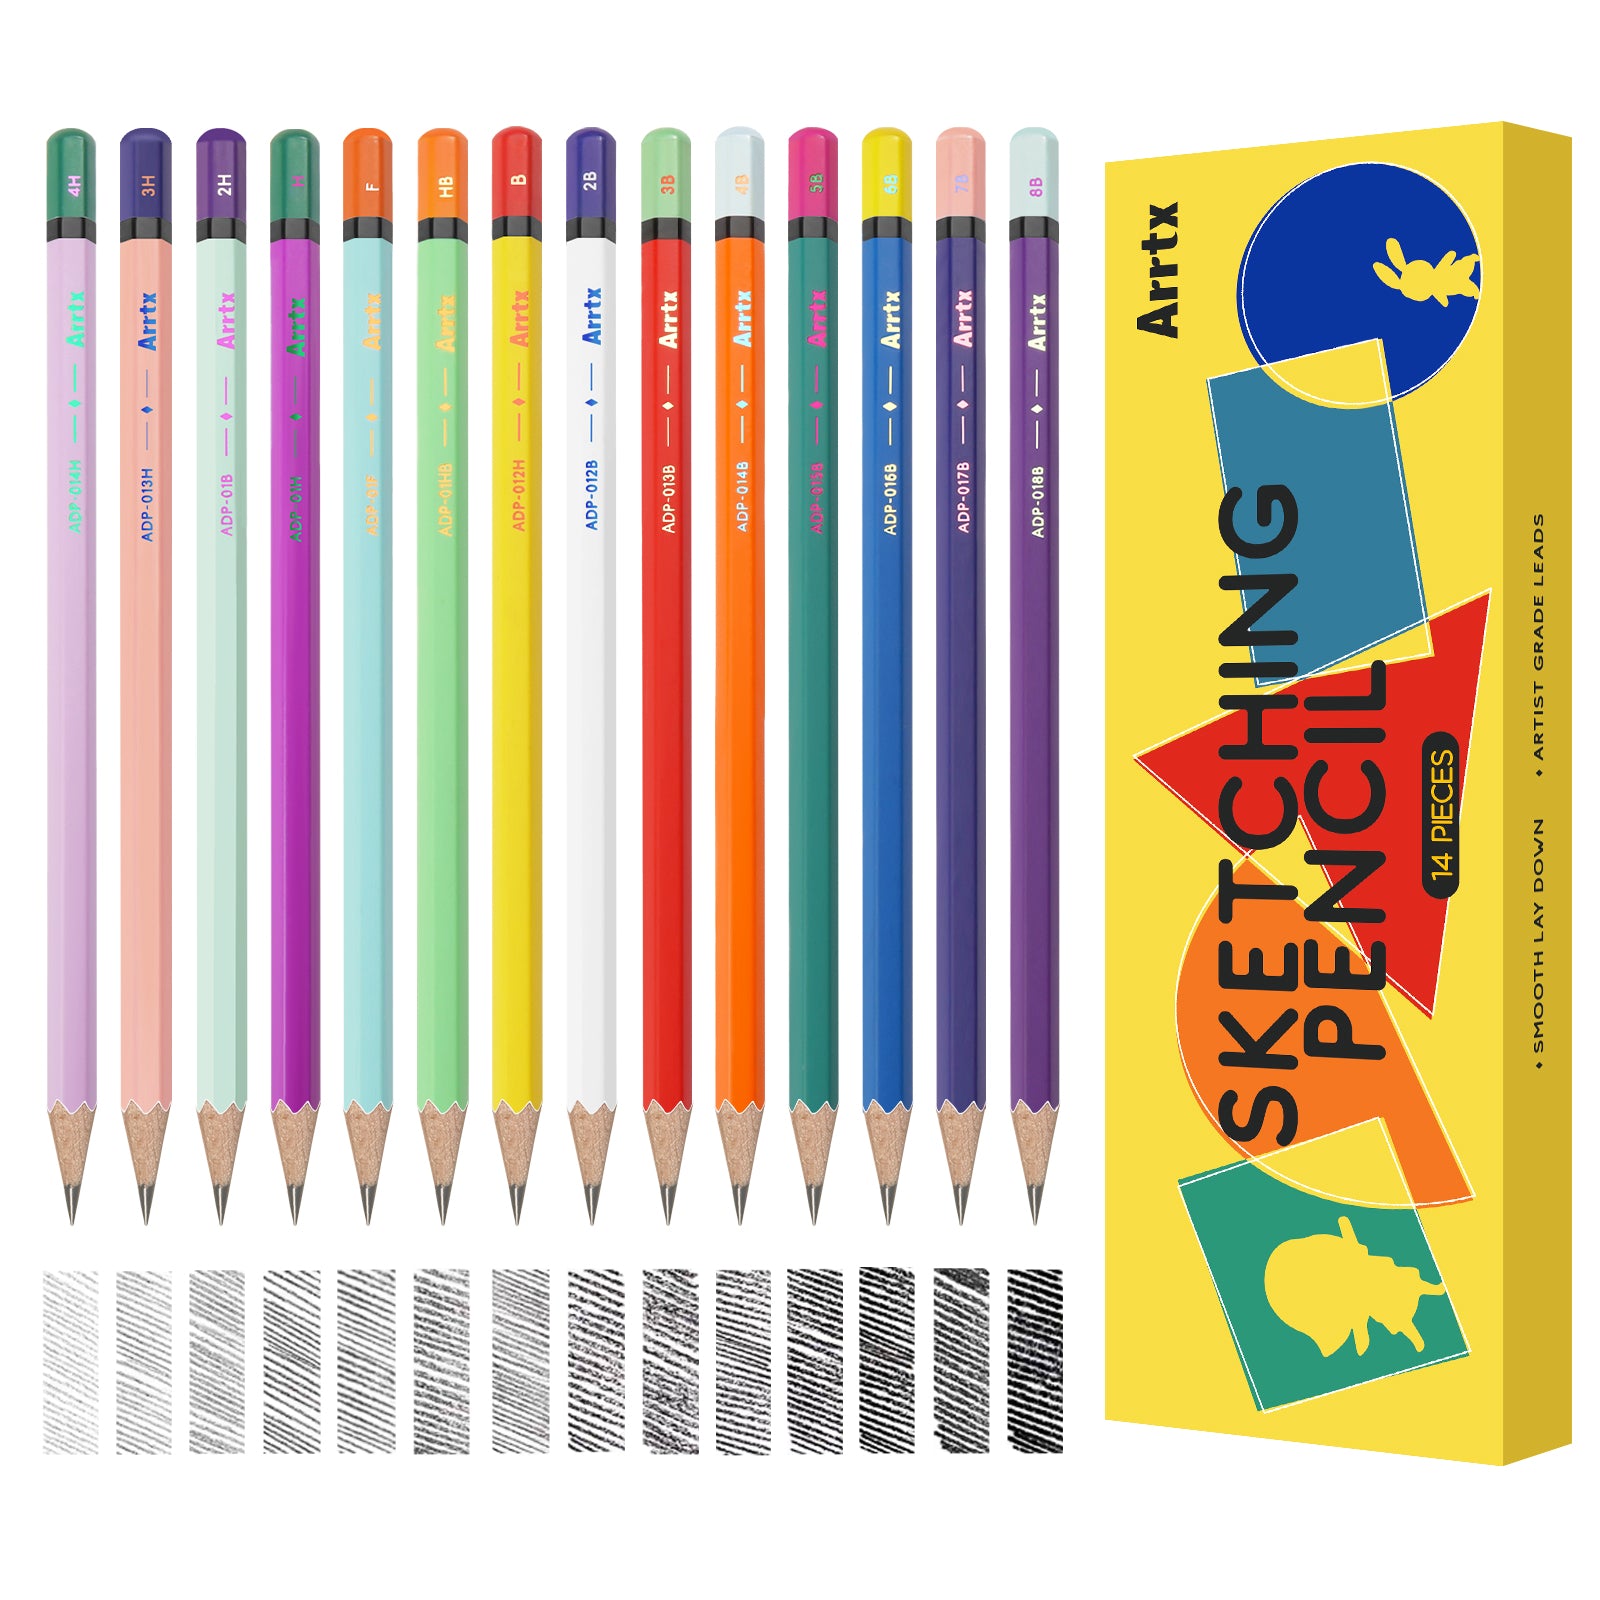 Arrtx Drawing Pencils, 14 Pcs (4H - 8B) Artist Sketching Pencils for Drawing